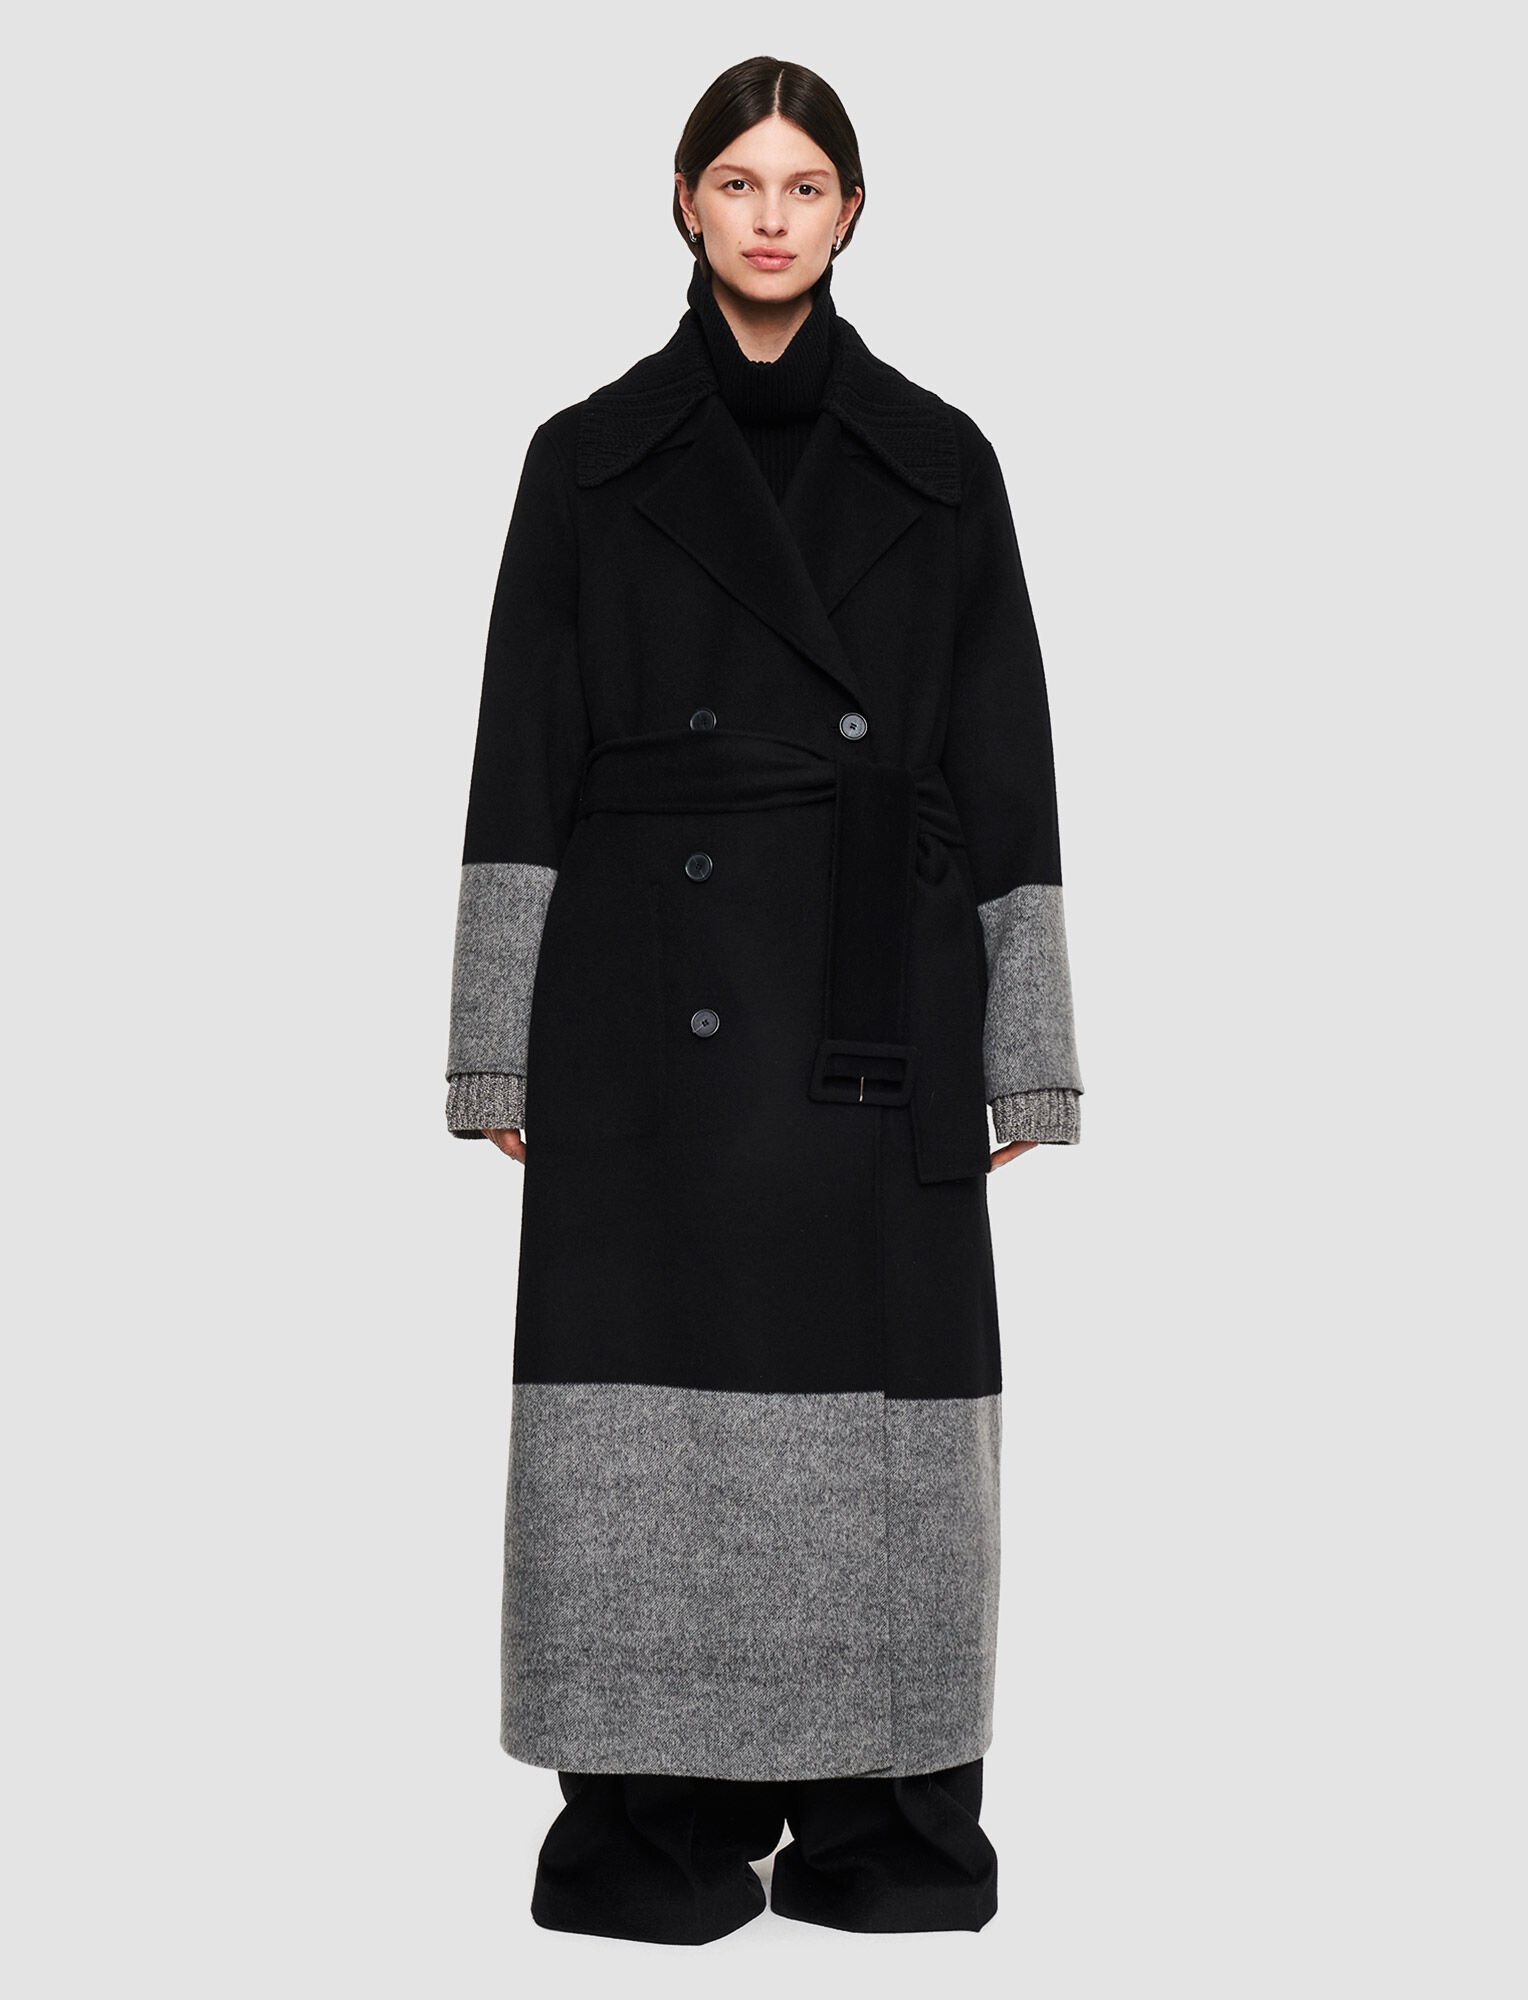 Joseph Reversible Double Face Colour Block Merton Coat - Size 32 - Black/Grey - 100% Wool